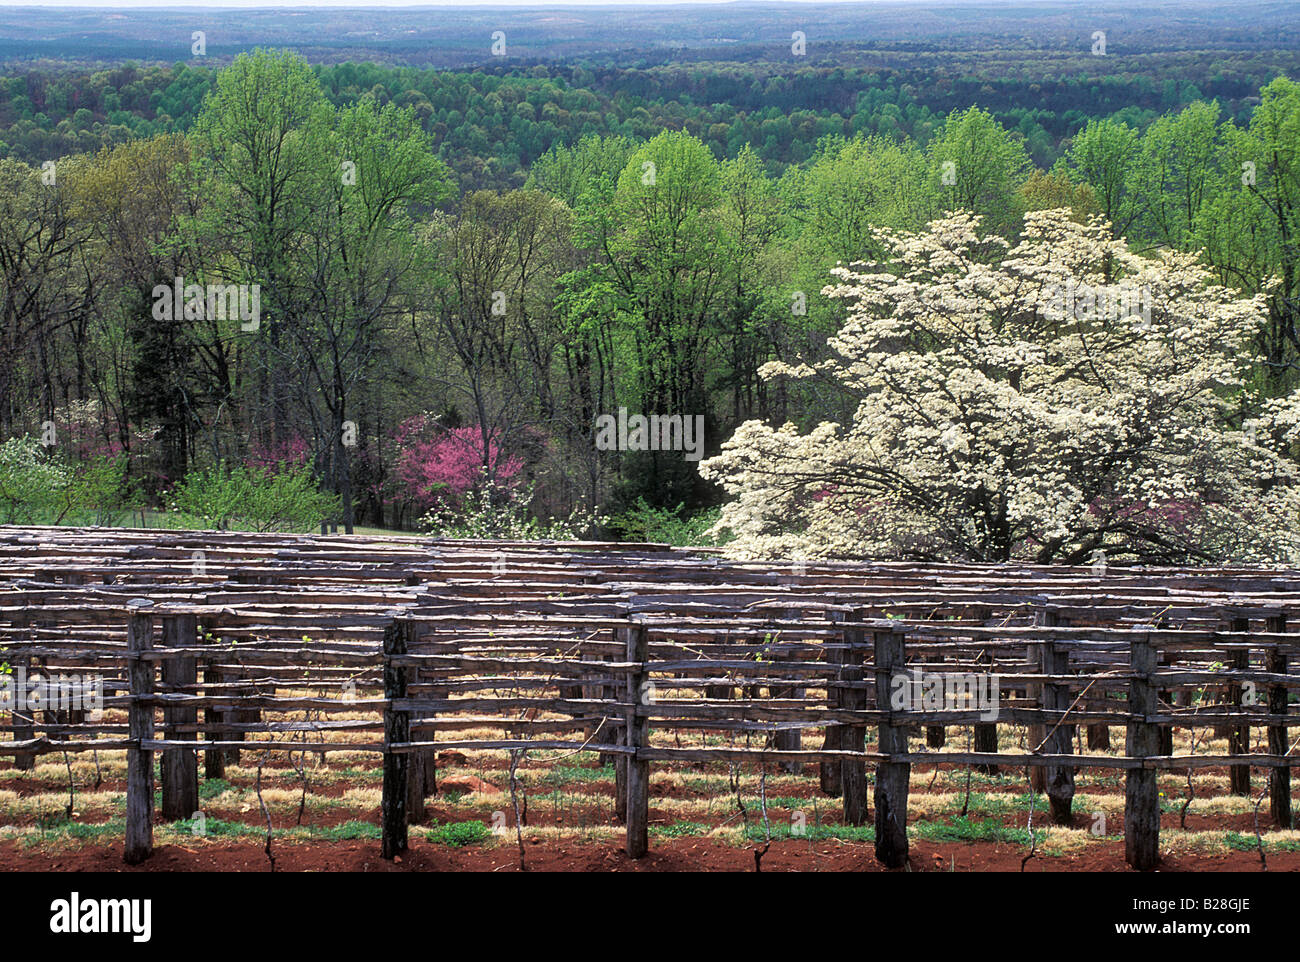 Vineyard at Monticello Thomas Jefferson home in Charlottesville Virginia. Photograph Stock Photo